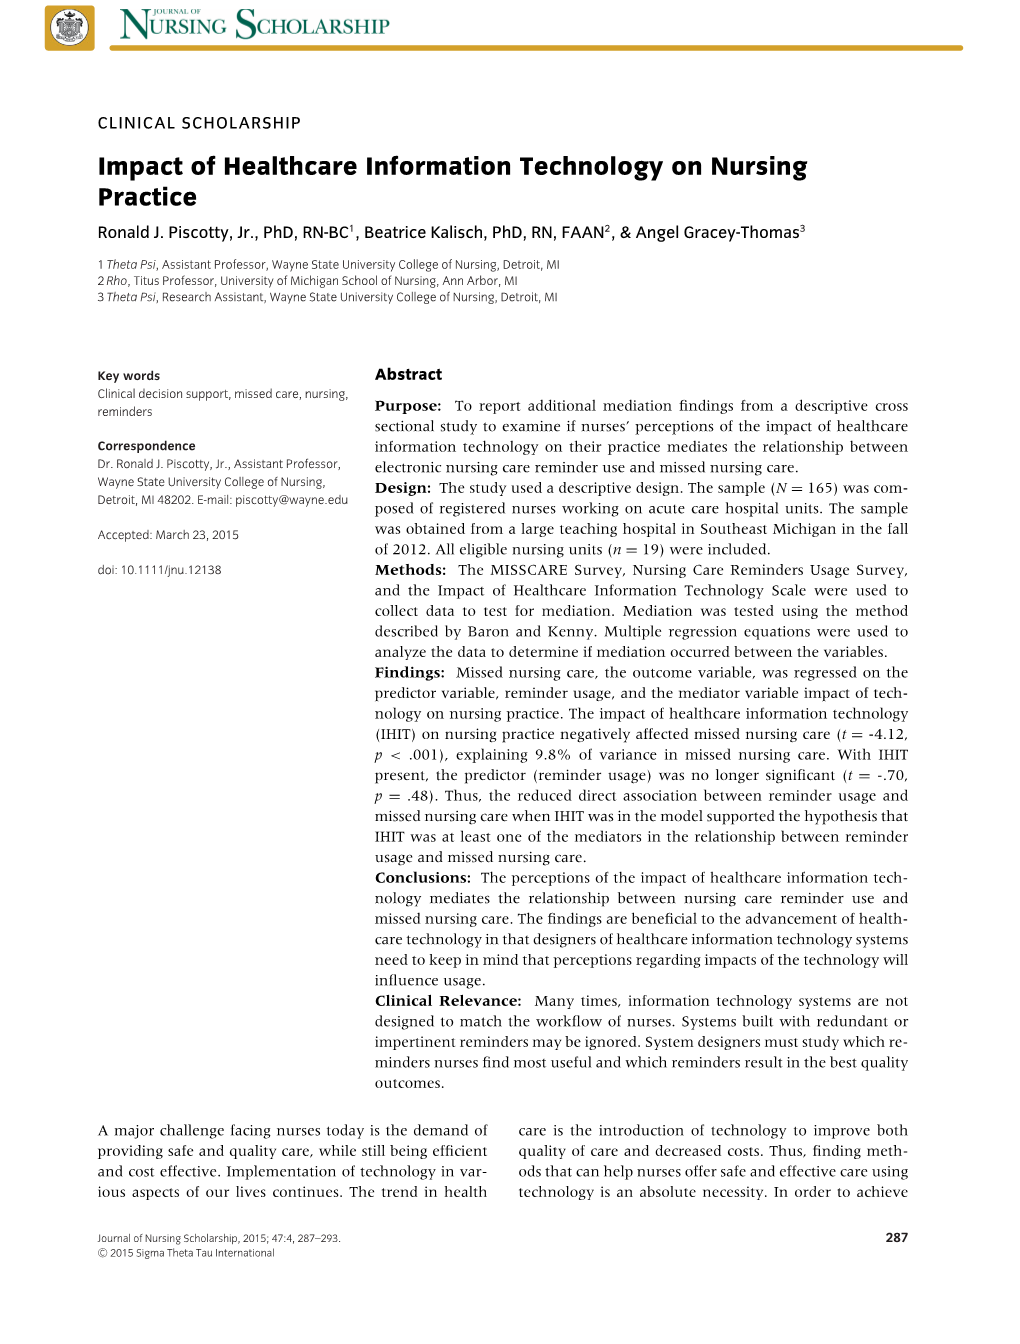 Impact of Healthcare Information Technology on Nursing Practice Ronald J